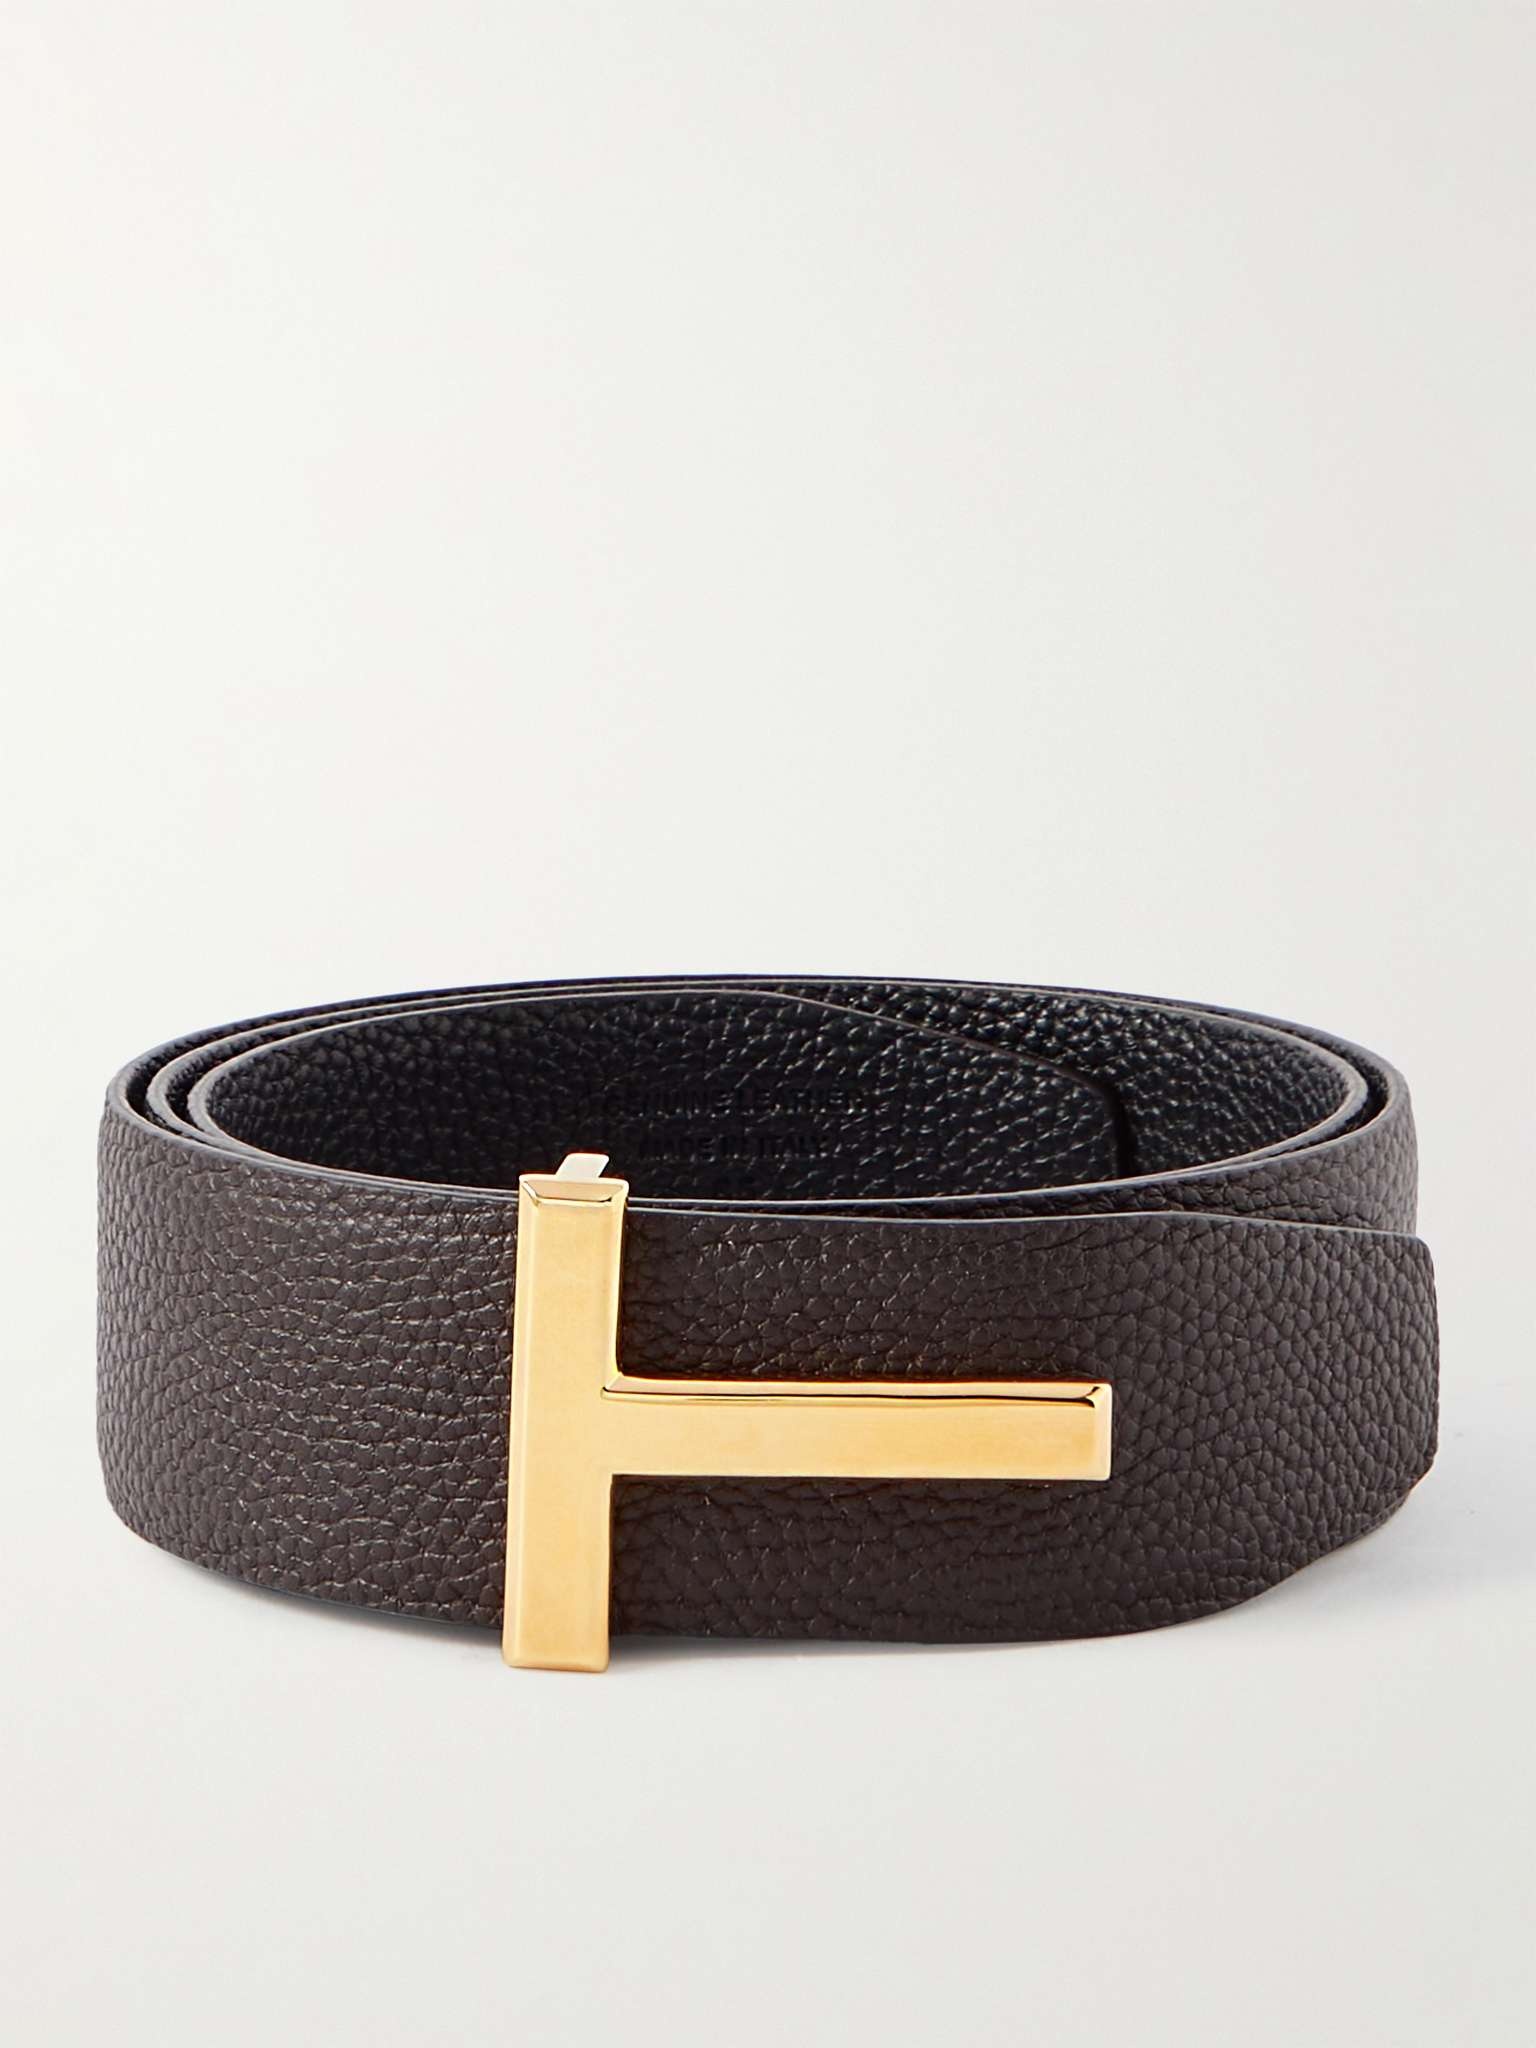 T-Logo Reversible Leather Belt - 30% Off!